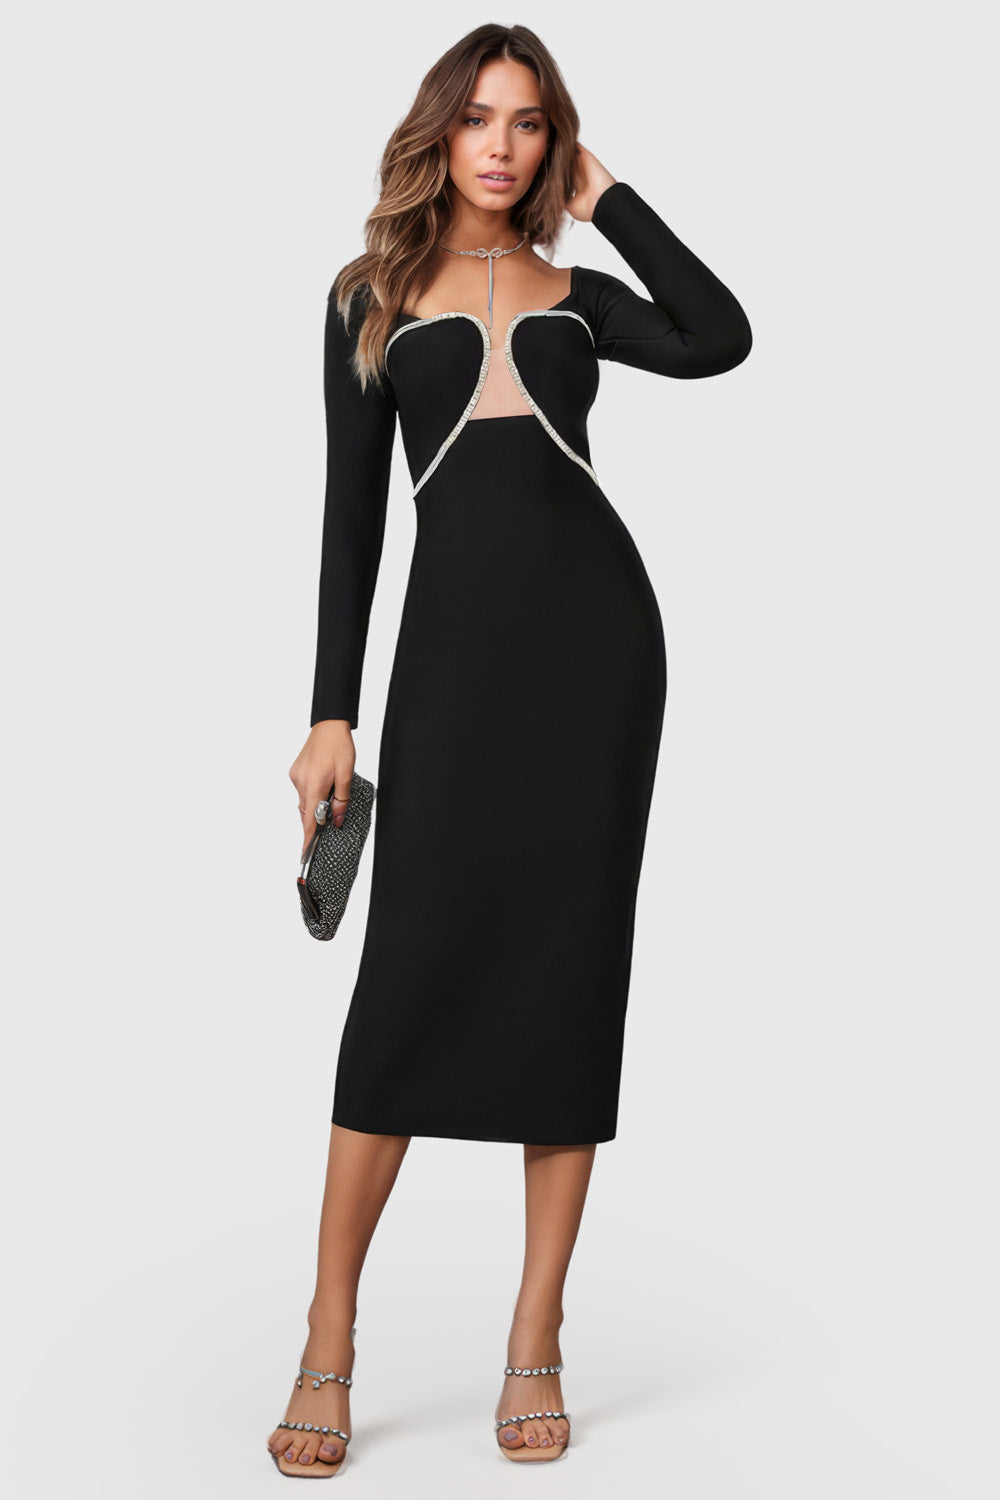 Black Elegant Long Sleeve Bodycon Dress